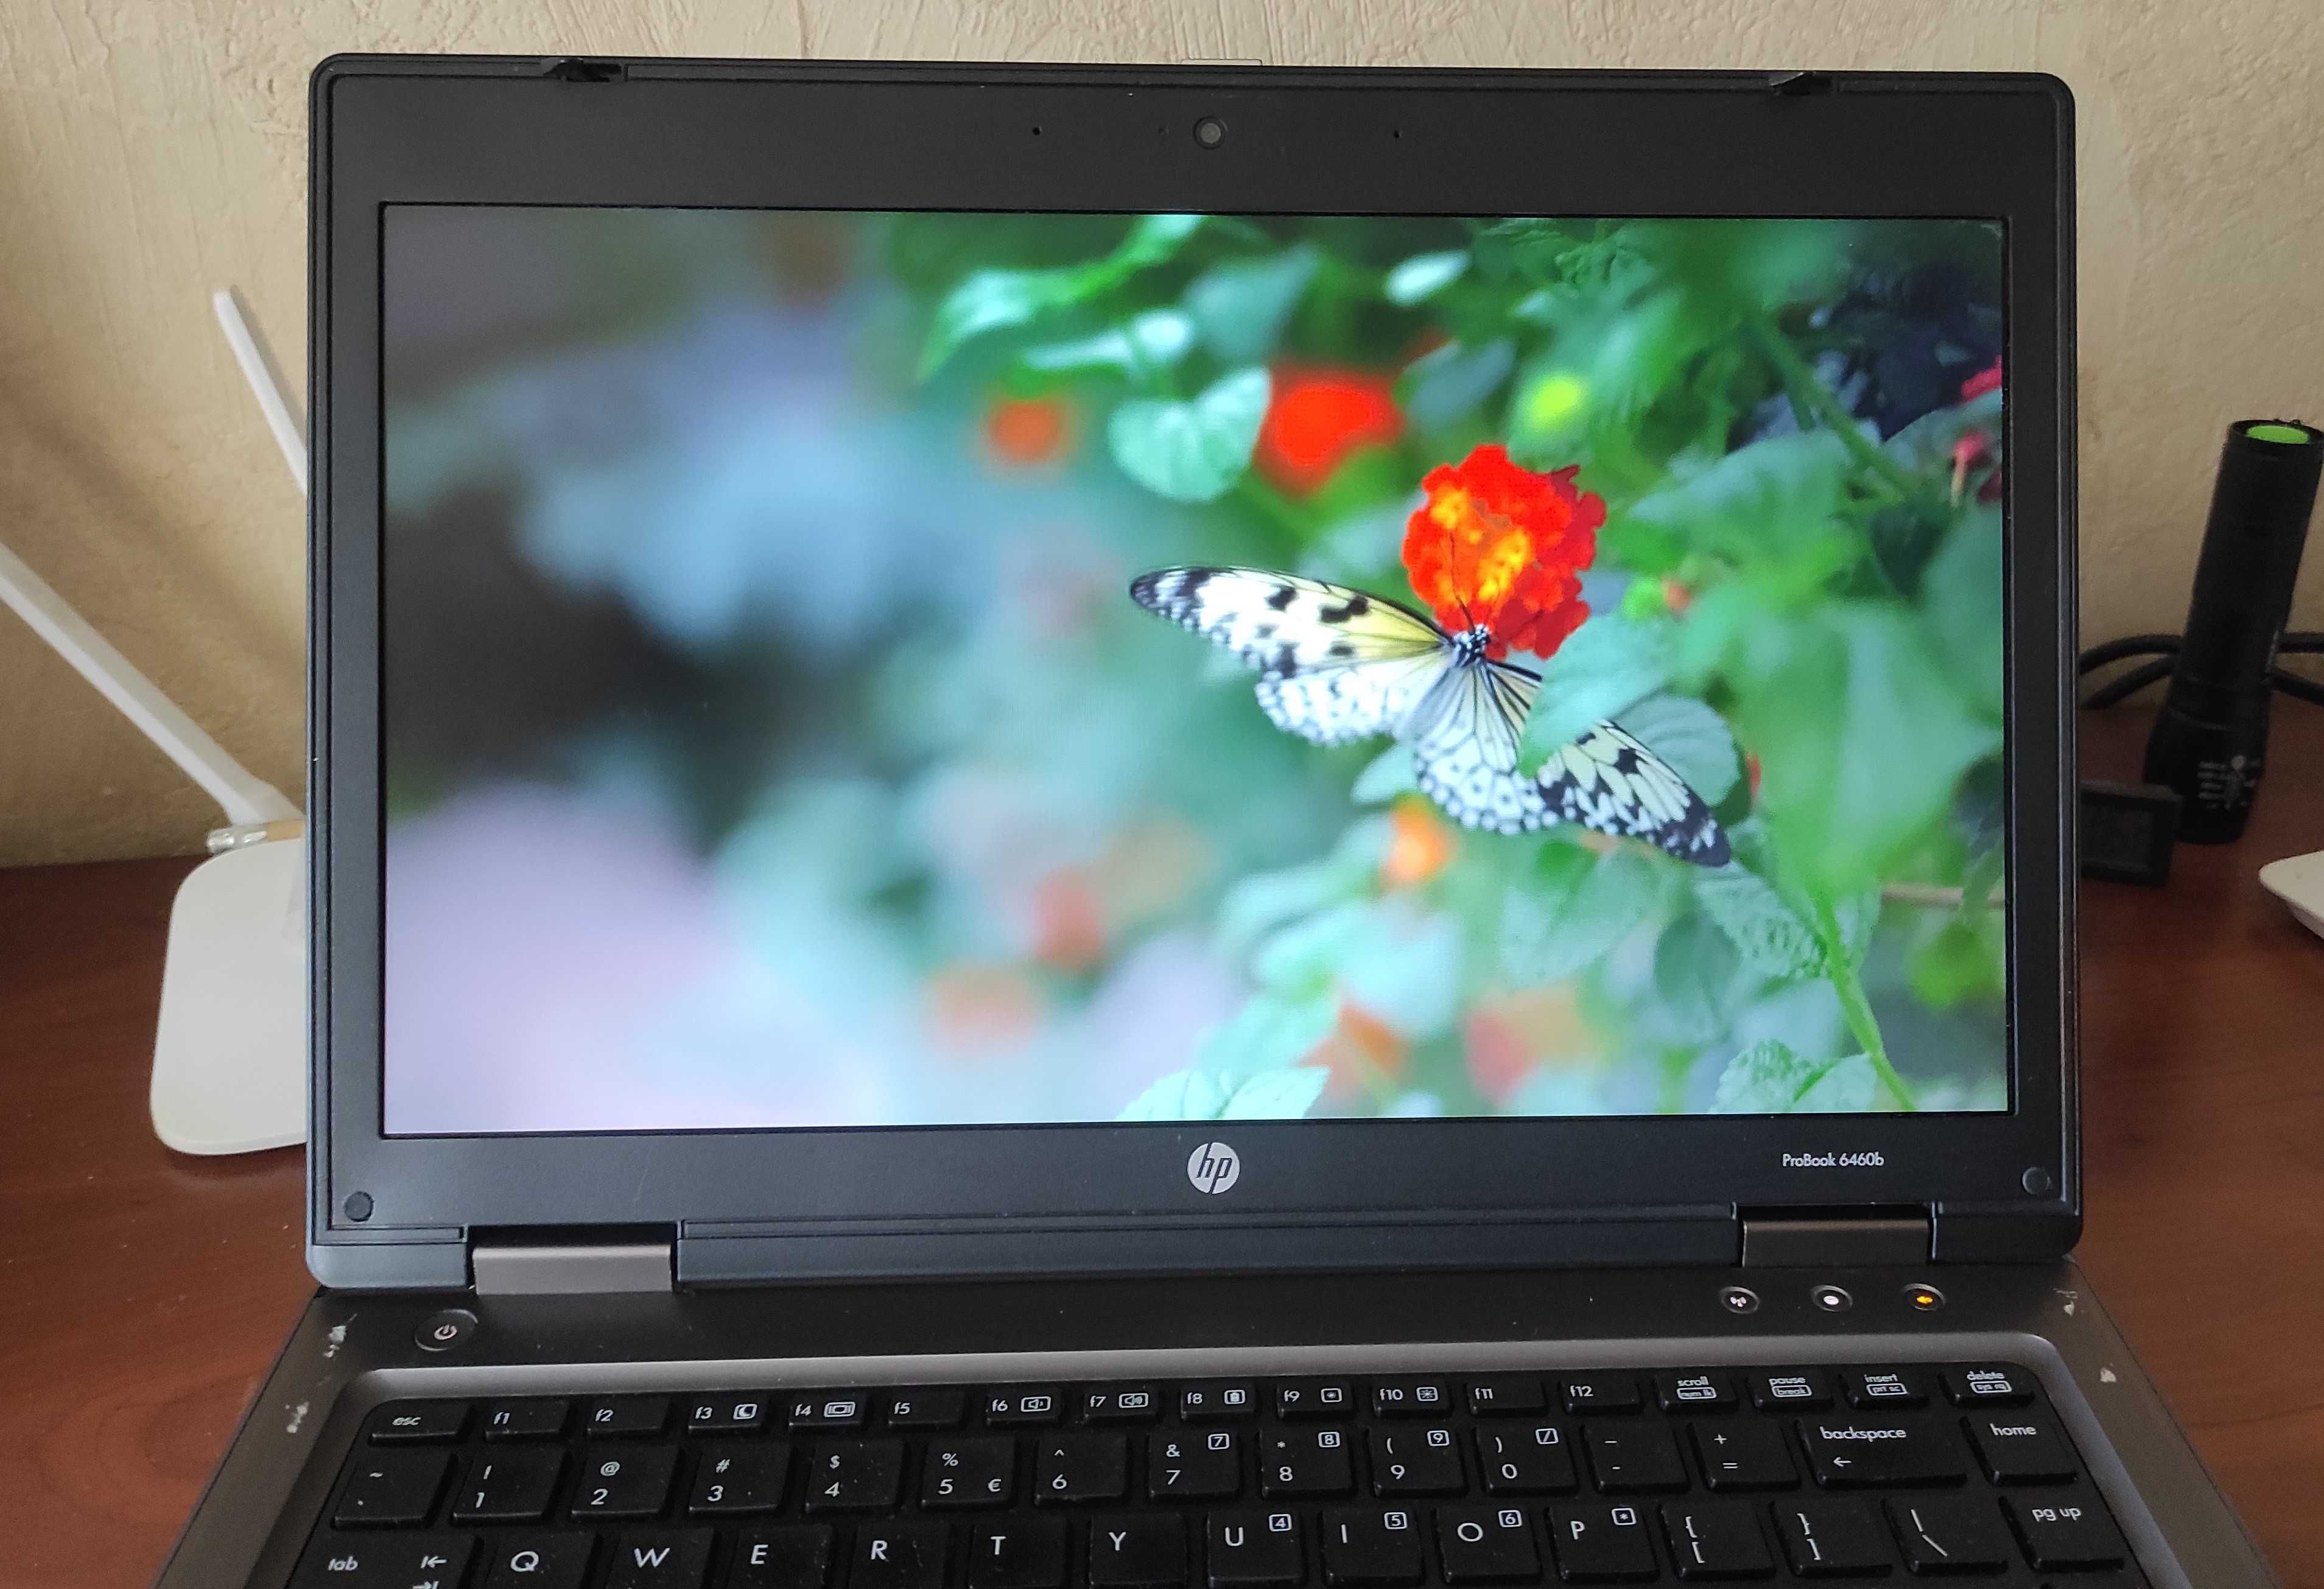 Ноутбук HP ProBook 6470b\i5-3340\4gb DDR3 - 1600\14"\320 Gb